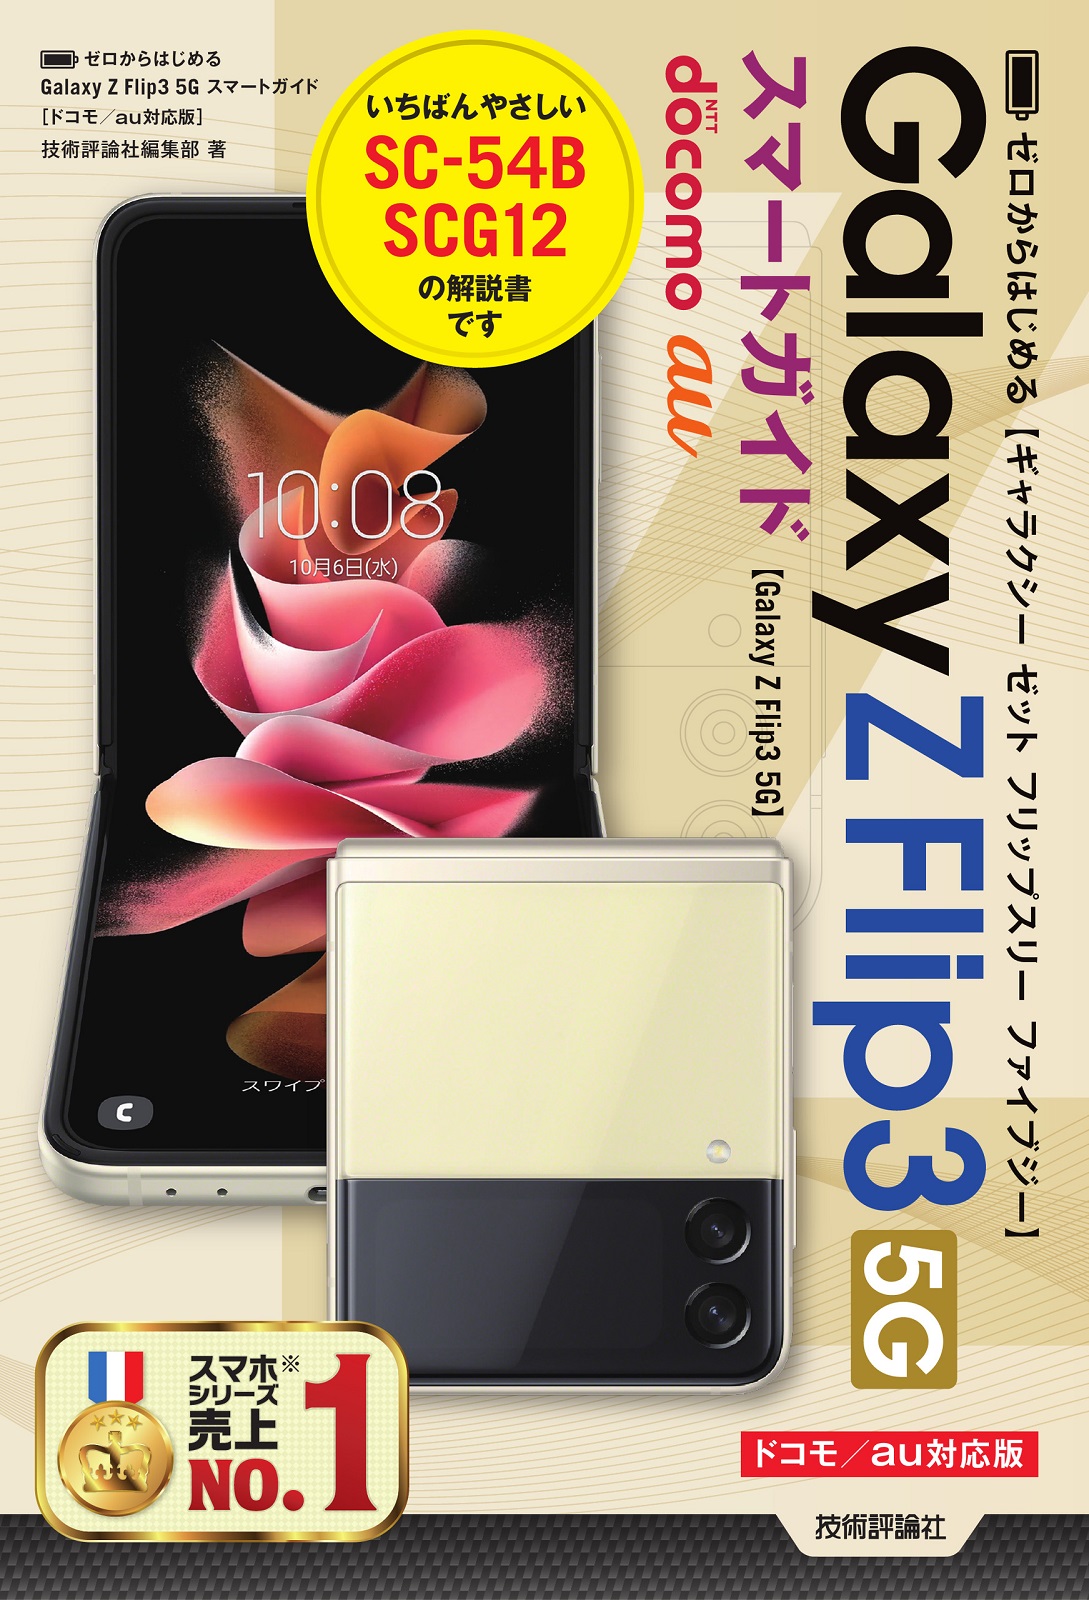 Galaxy Z FLIP3 au版 - スマートフォン本体